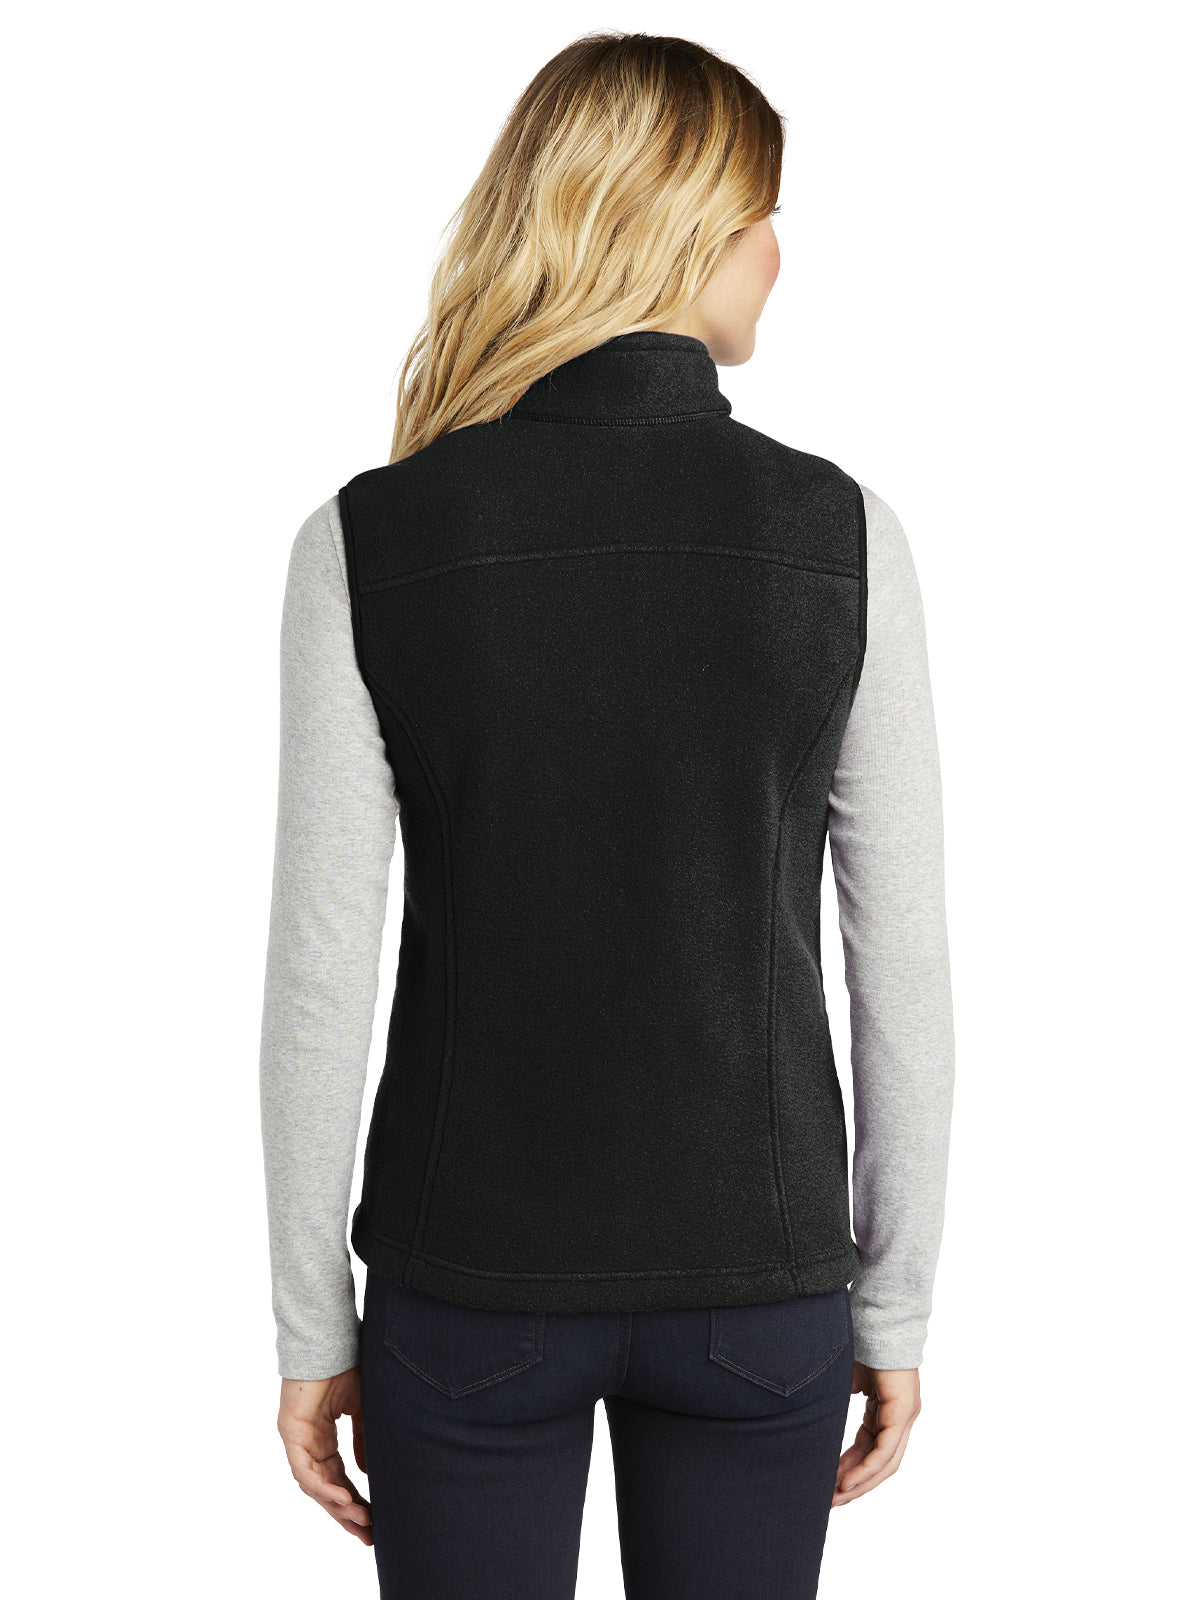 Women's Fleece Vest - EB205 - Black